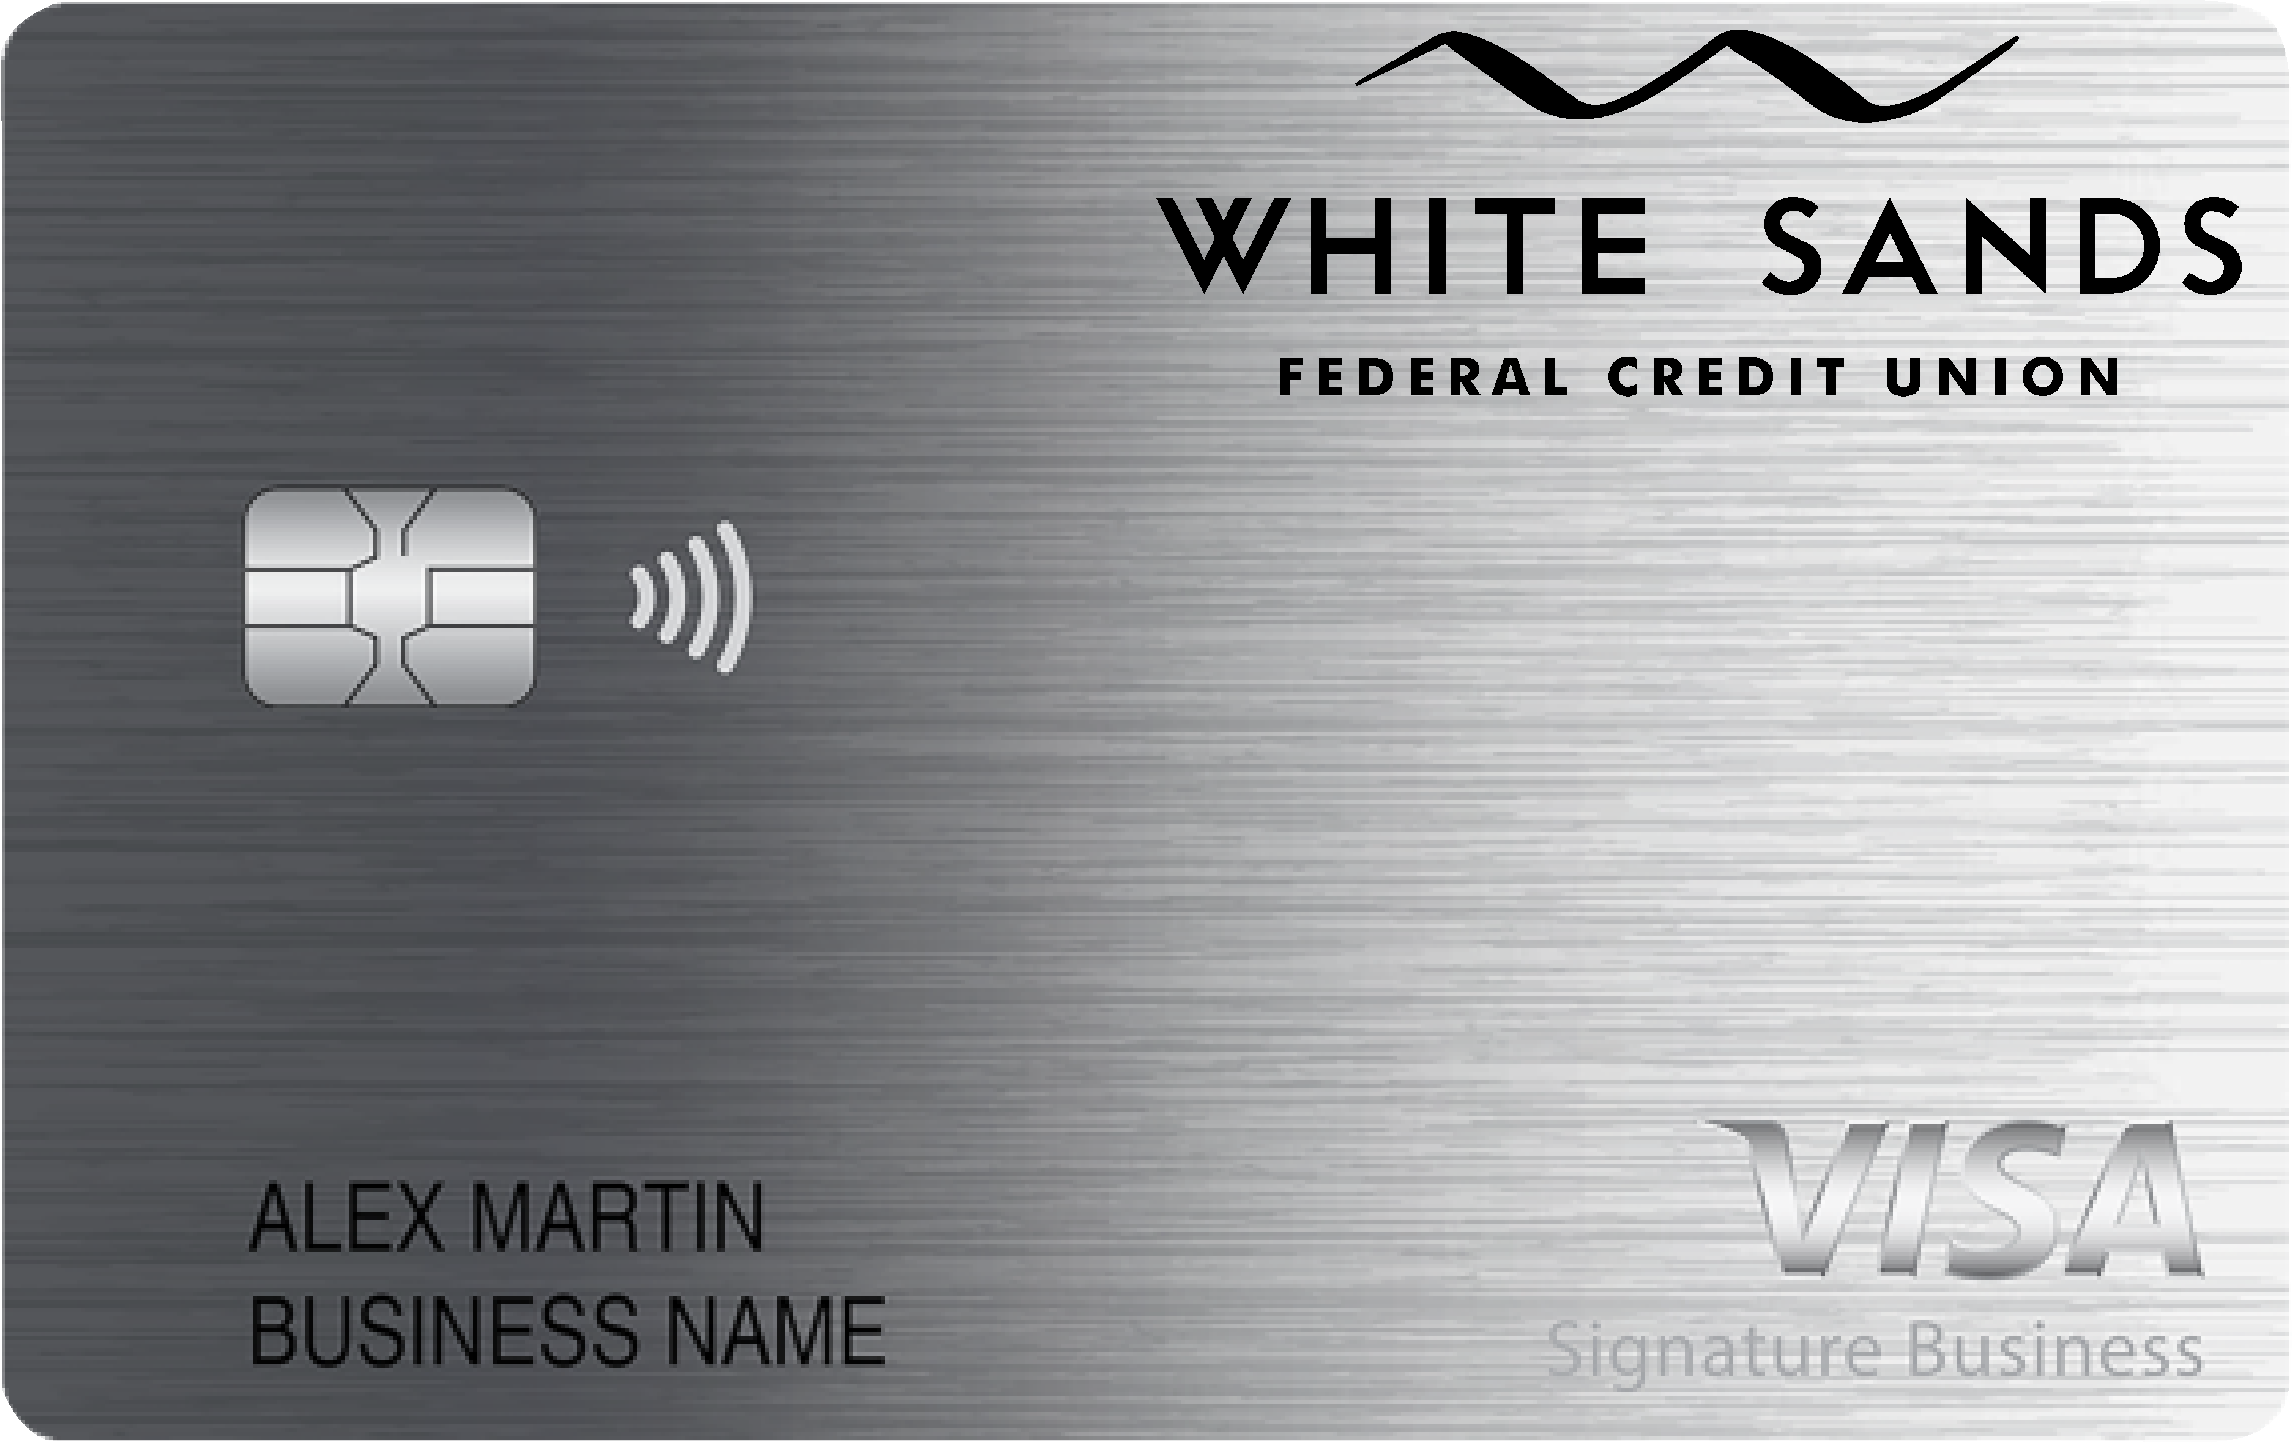 White Sands Federal Credit Union Smart Business Rewards Card